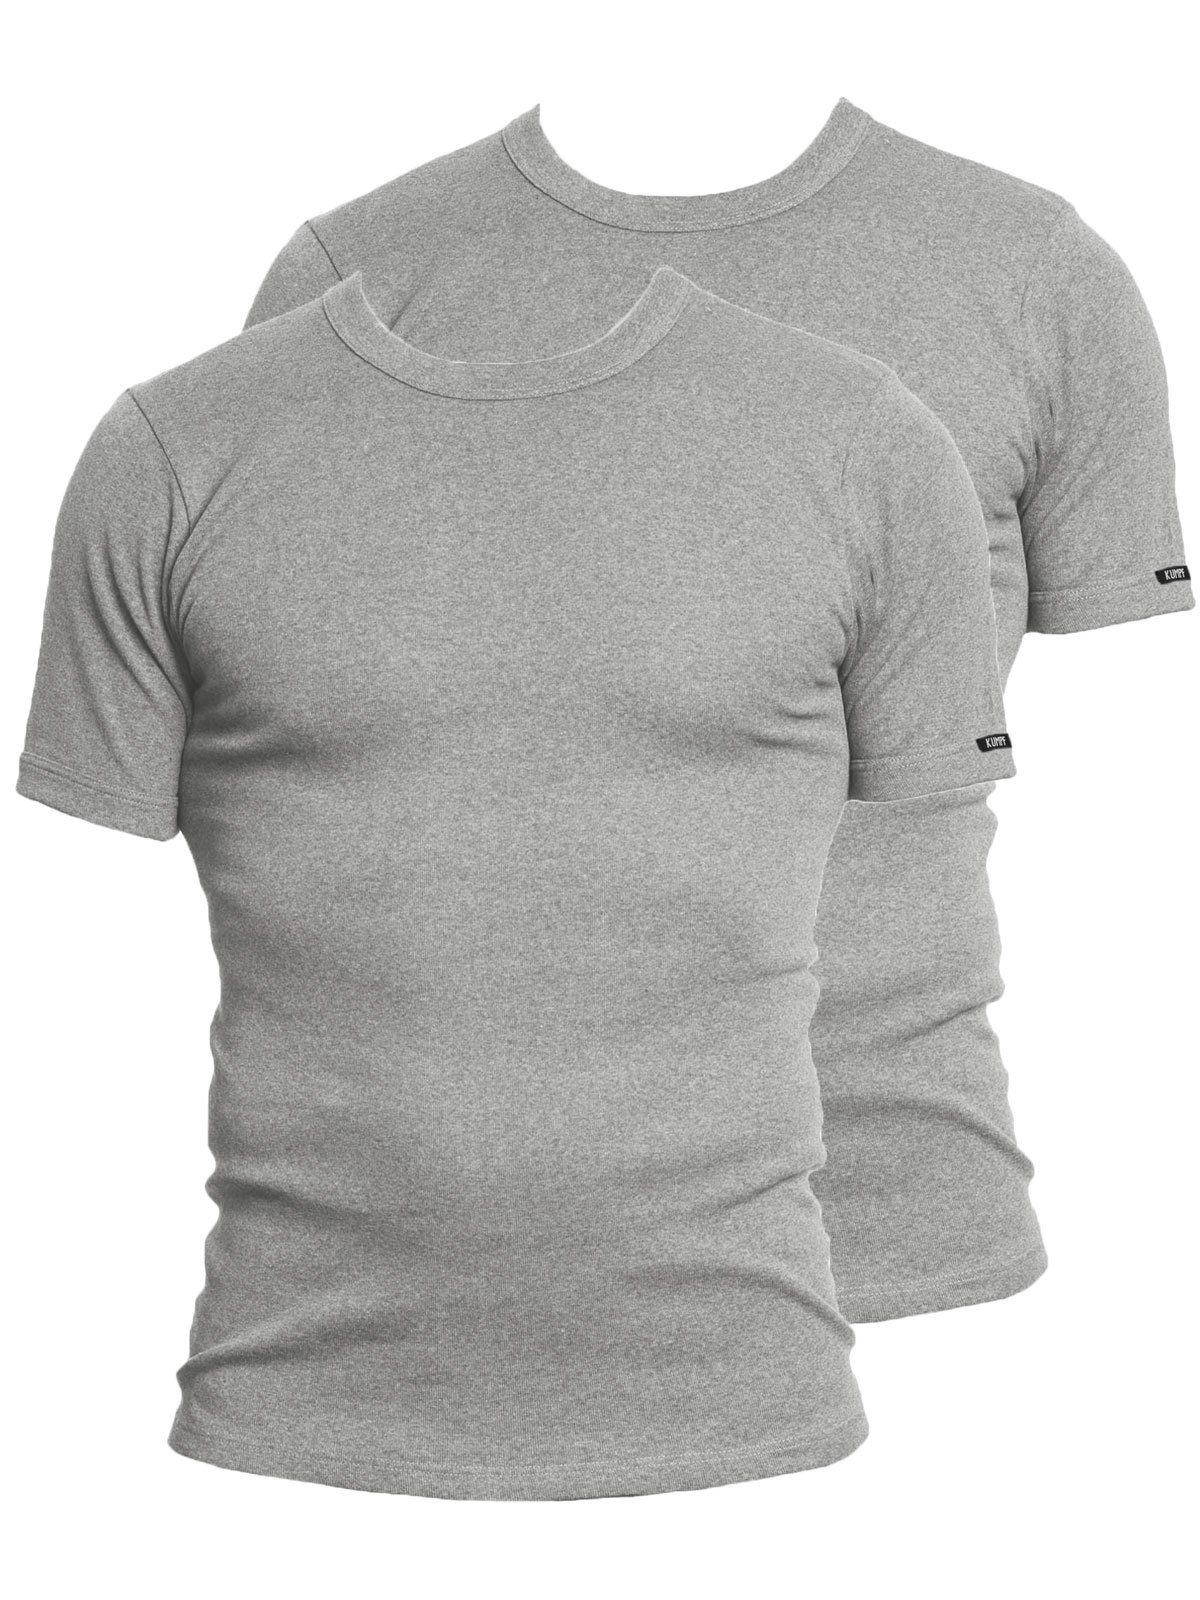 KUMPF Unterziehshirt 2er Sparpack Herren T-Shirt Bio Cotton (Spar-Set, 2-St) hohe Markenqualität stahlgrau-melange